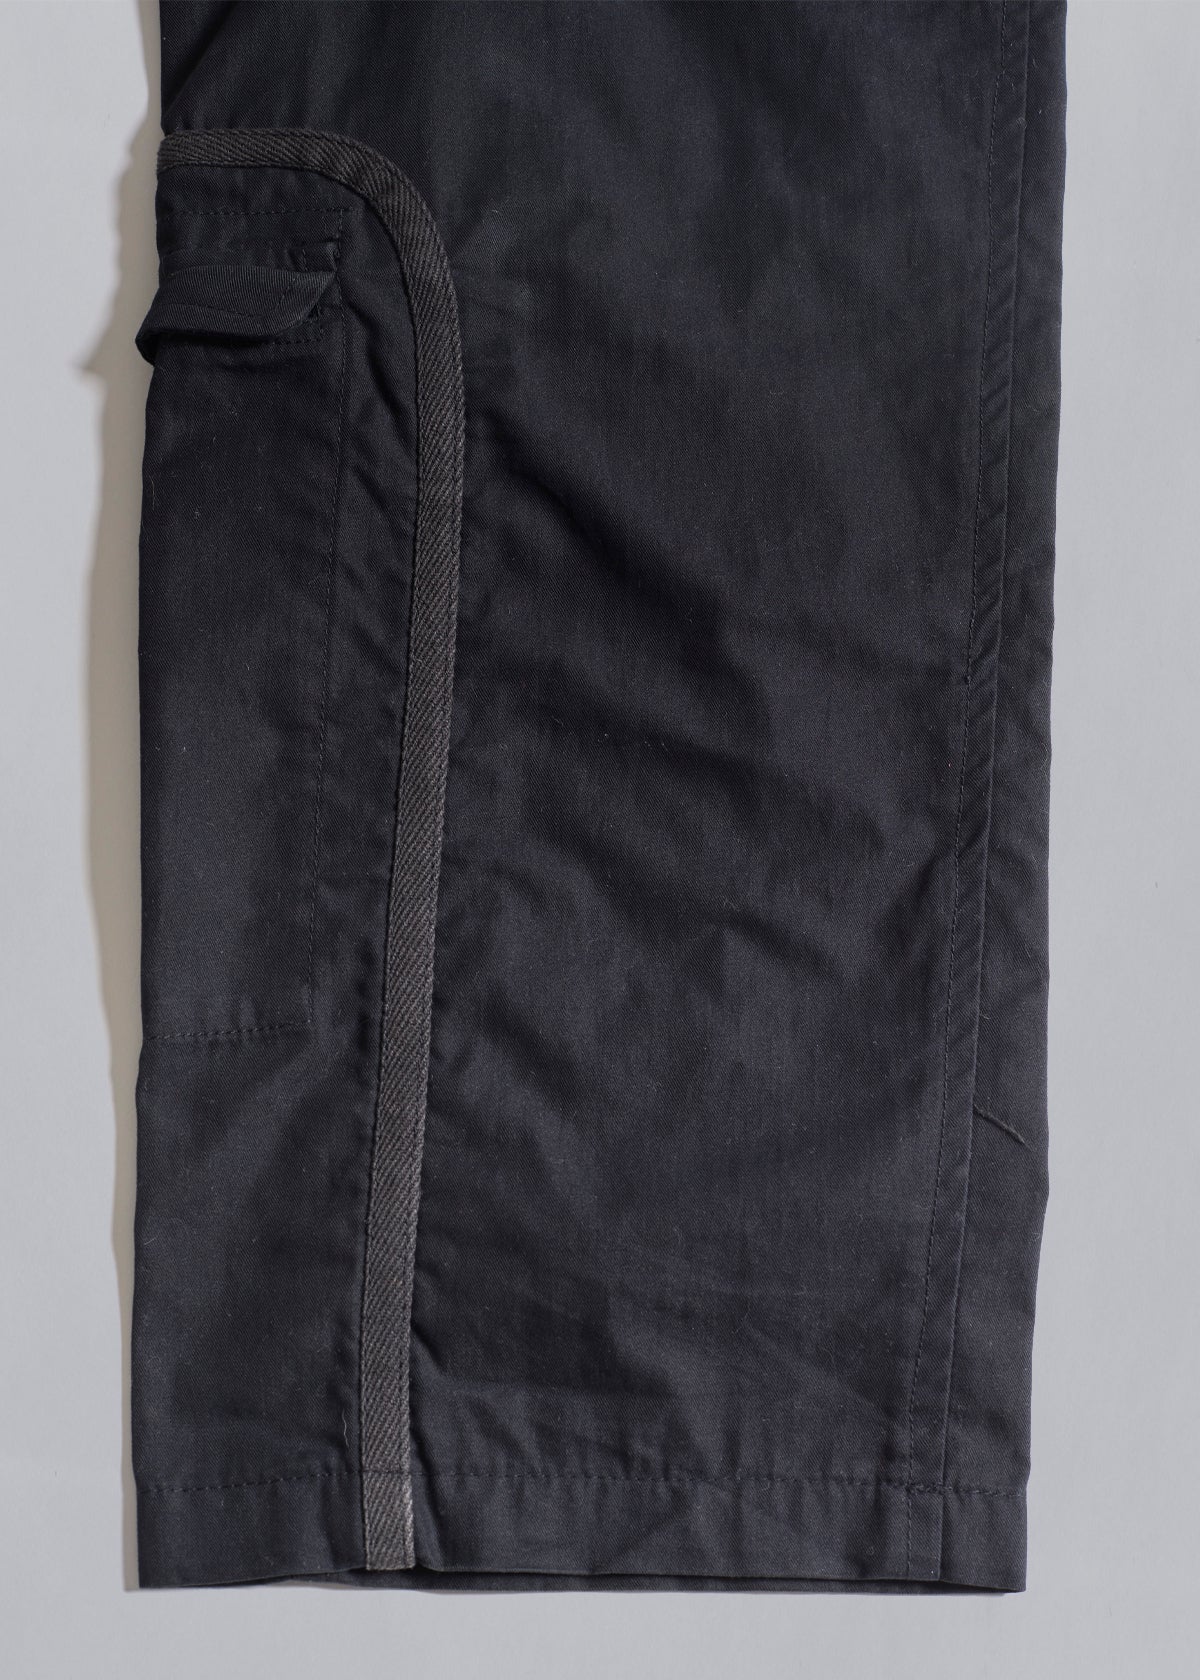 Multi Pocket Flight Pants AW2000 - Medium - The Archivist Store